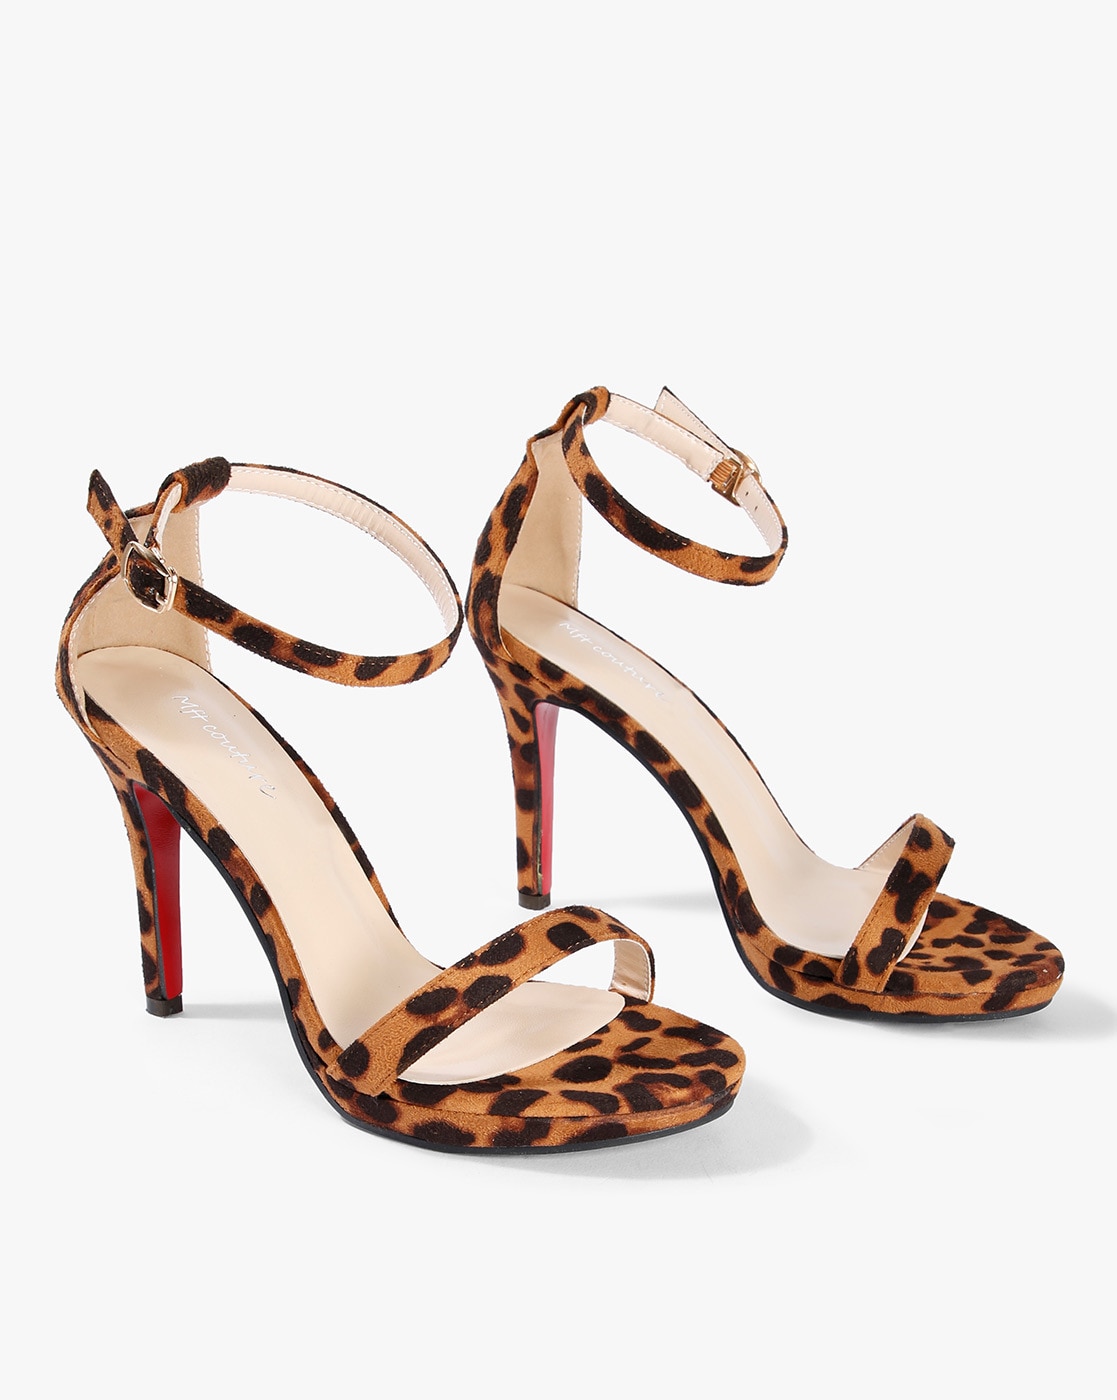 Charlotte Russe Leopard High Heels | Leopard high heels, Heels, High heels  shopping